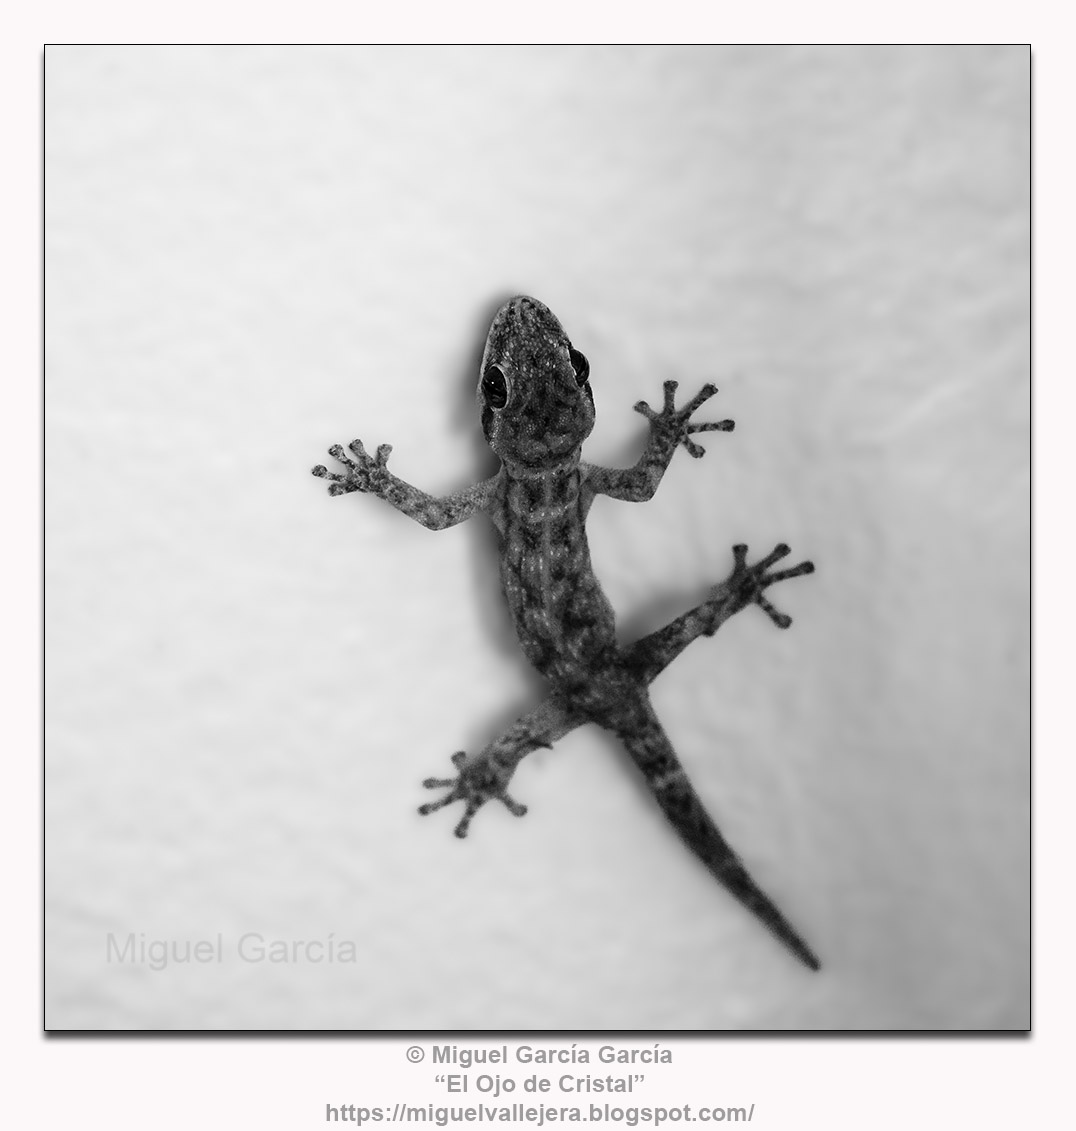 Jañape (Gecko)